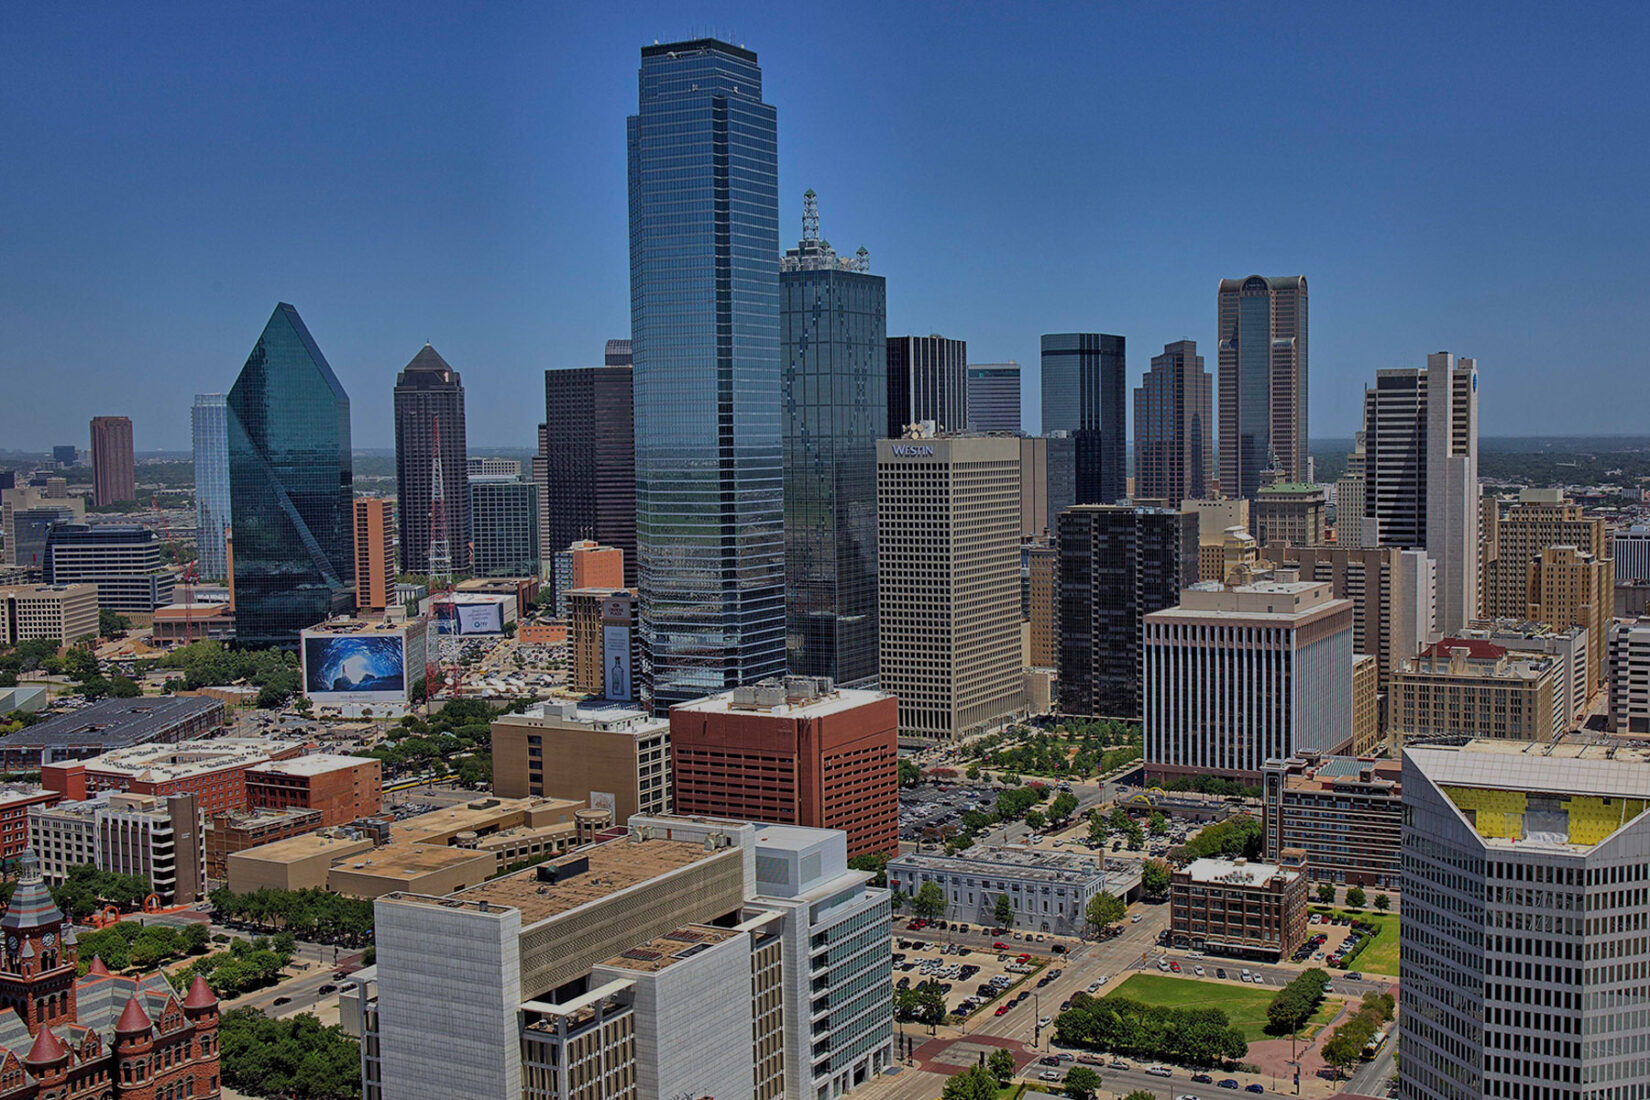 Dallas Skyline on a Clear Blue Day